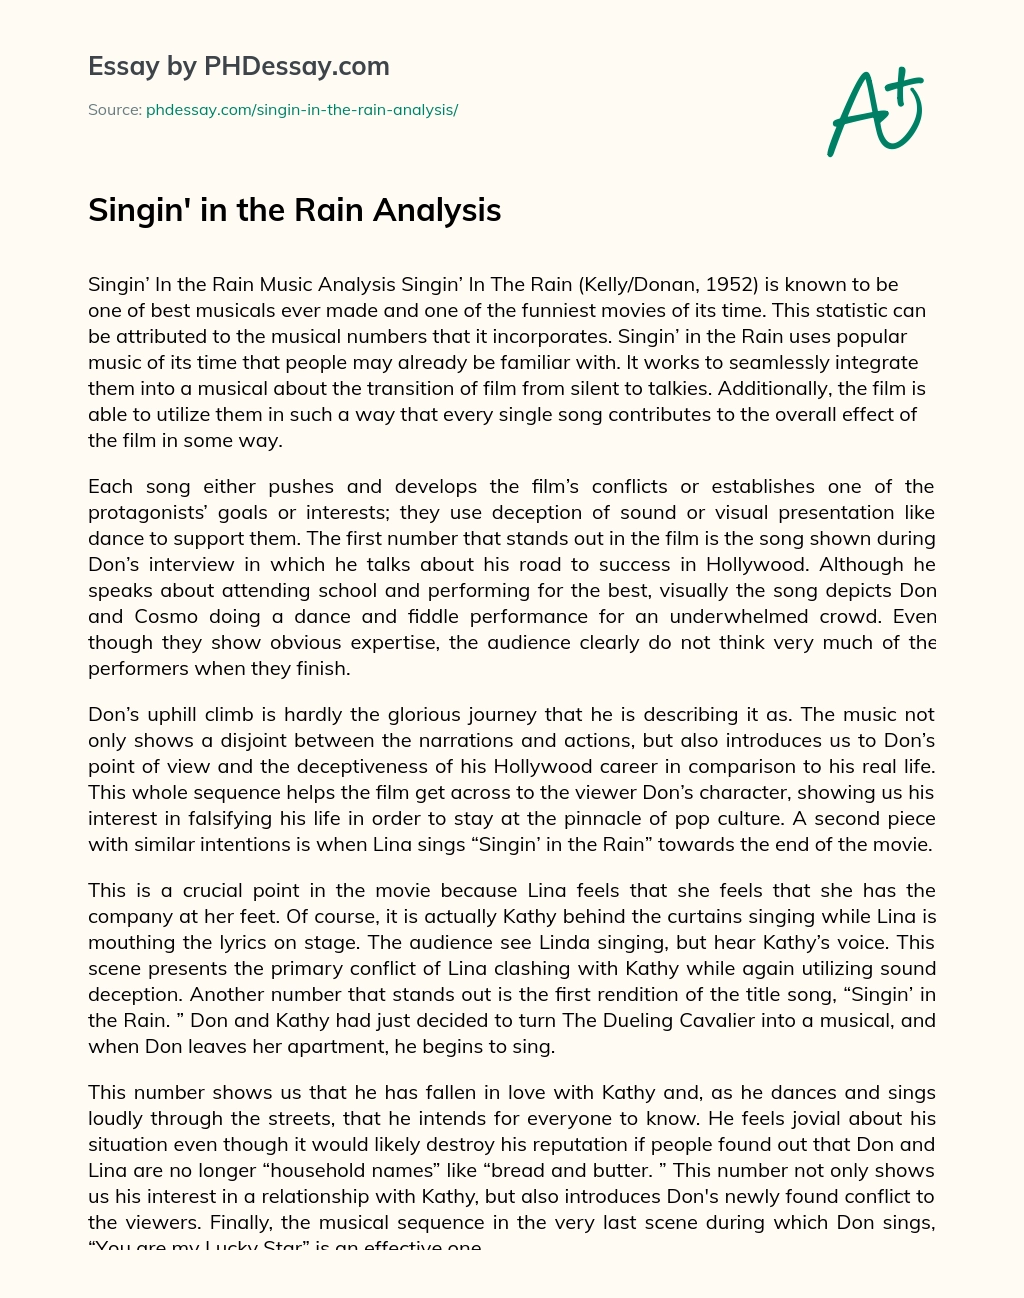 Singin’ in the Rain Analysis essay